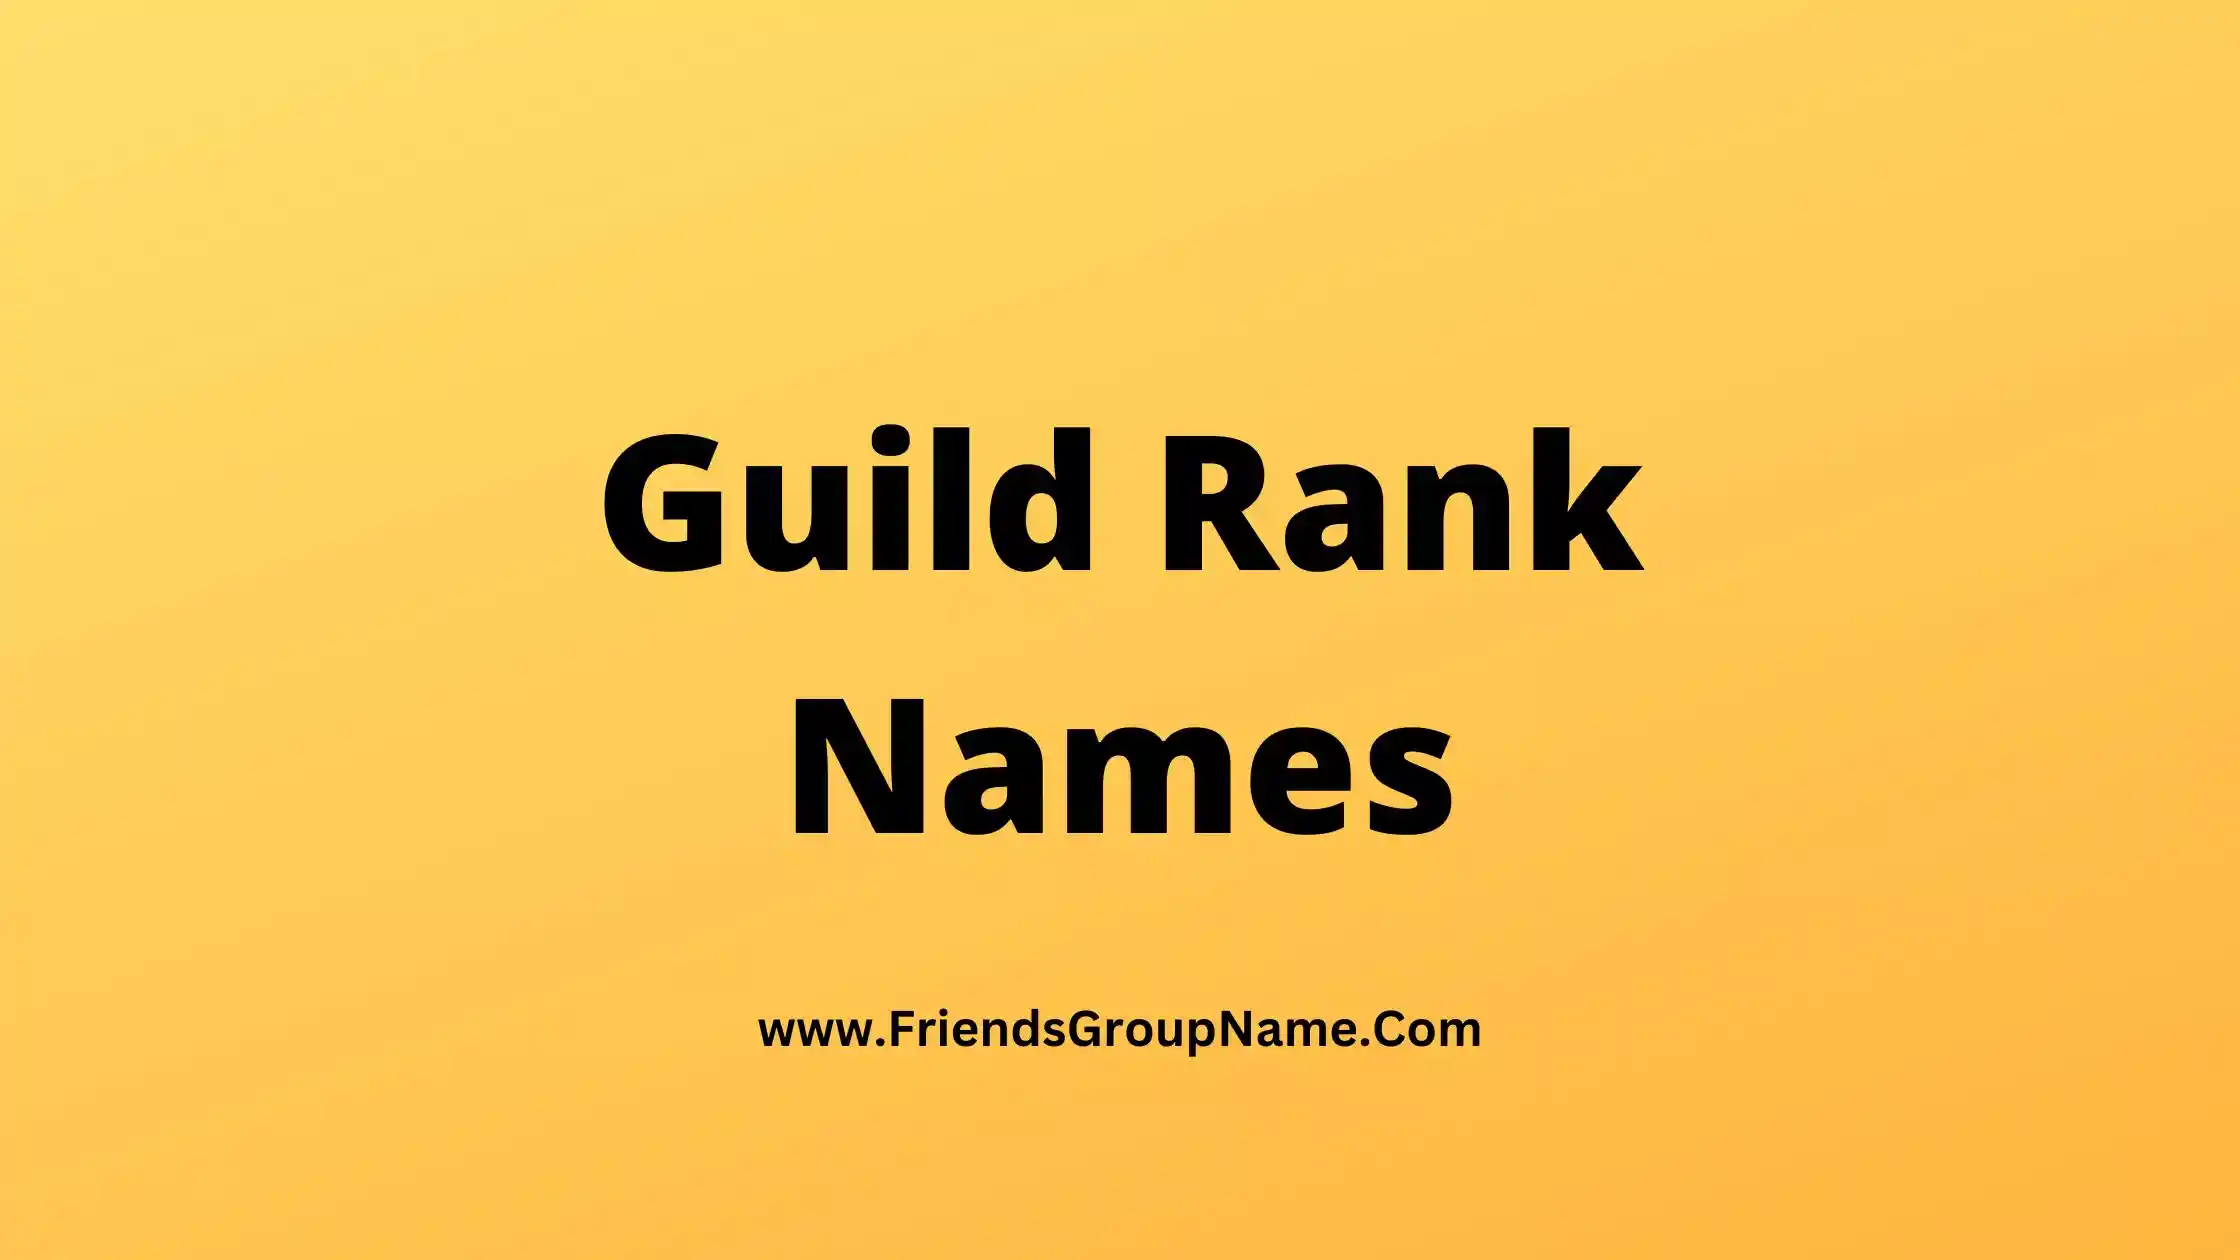 Guild Rank Names